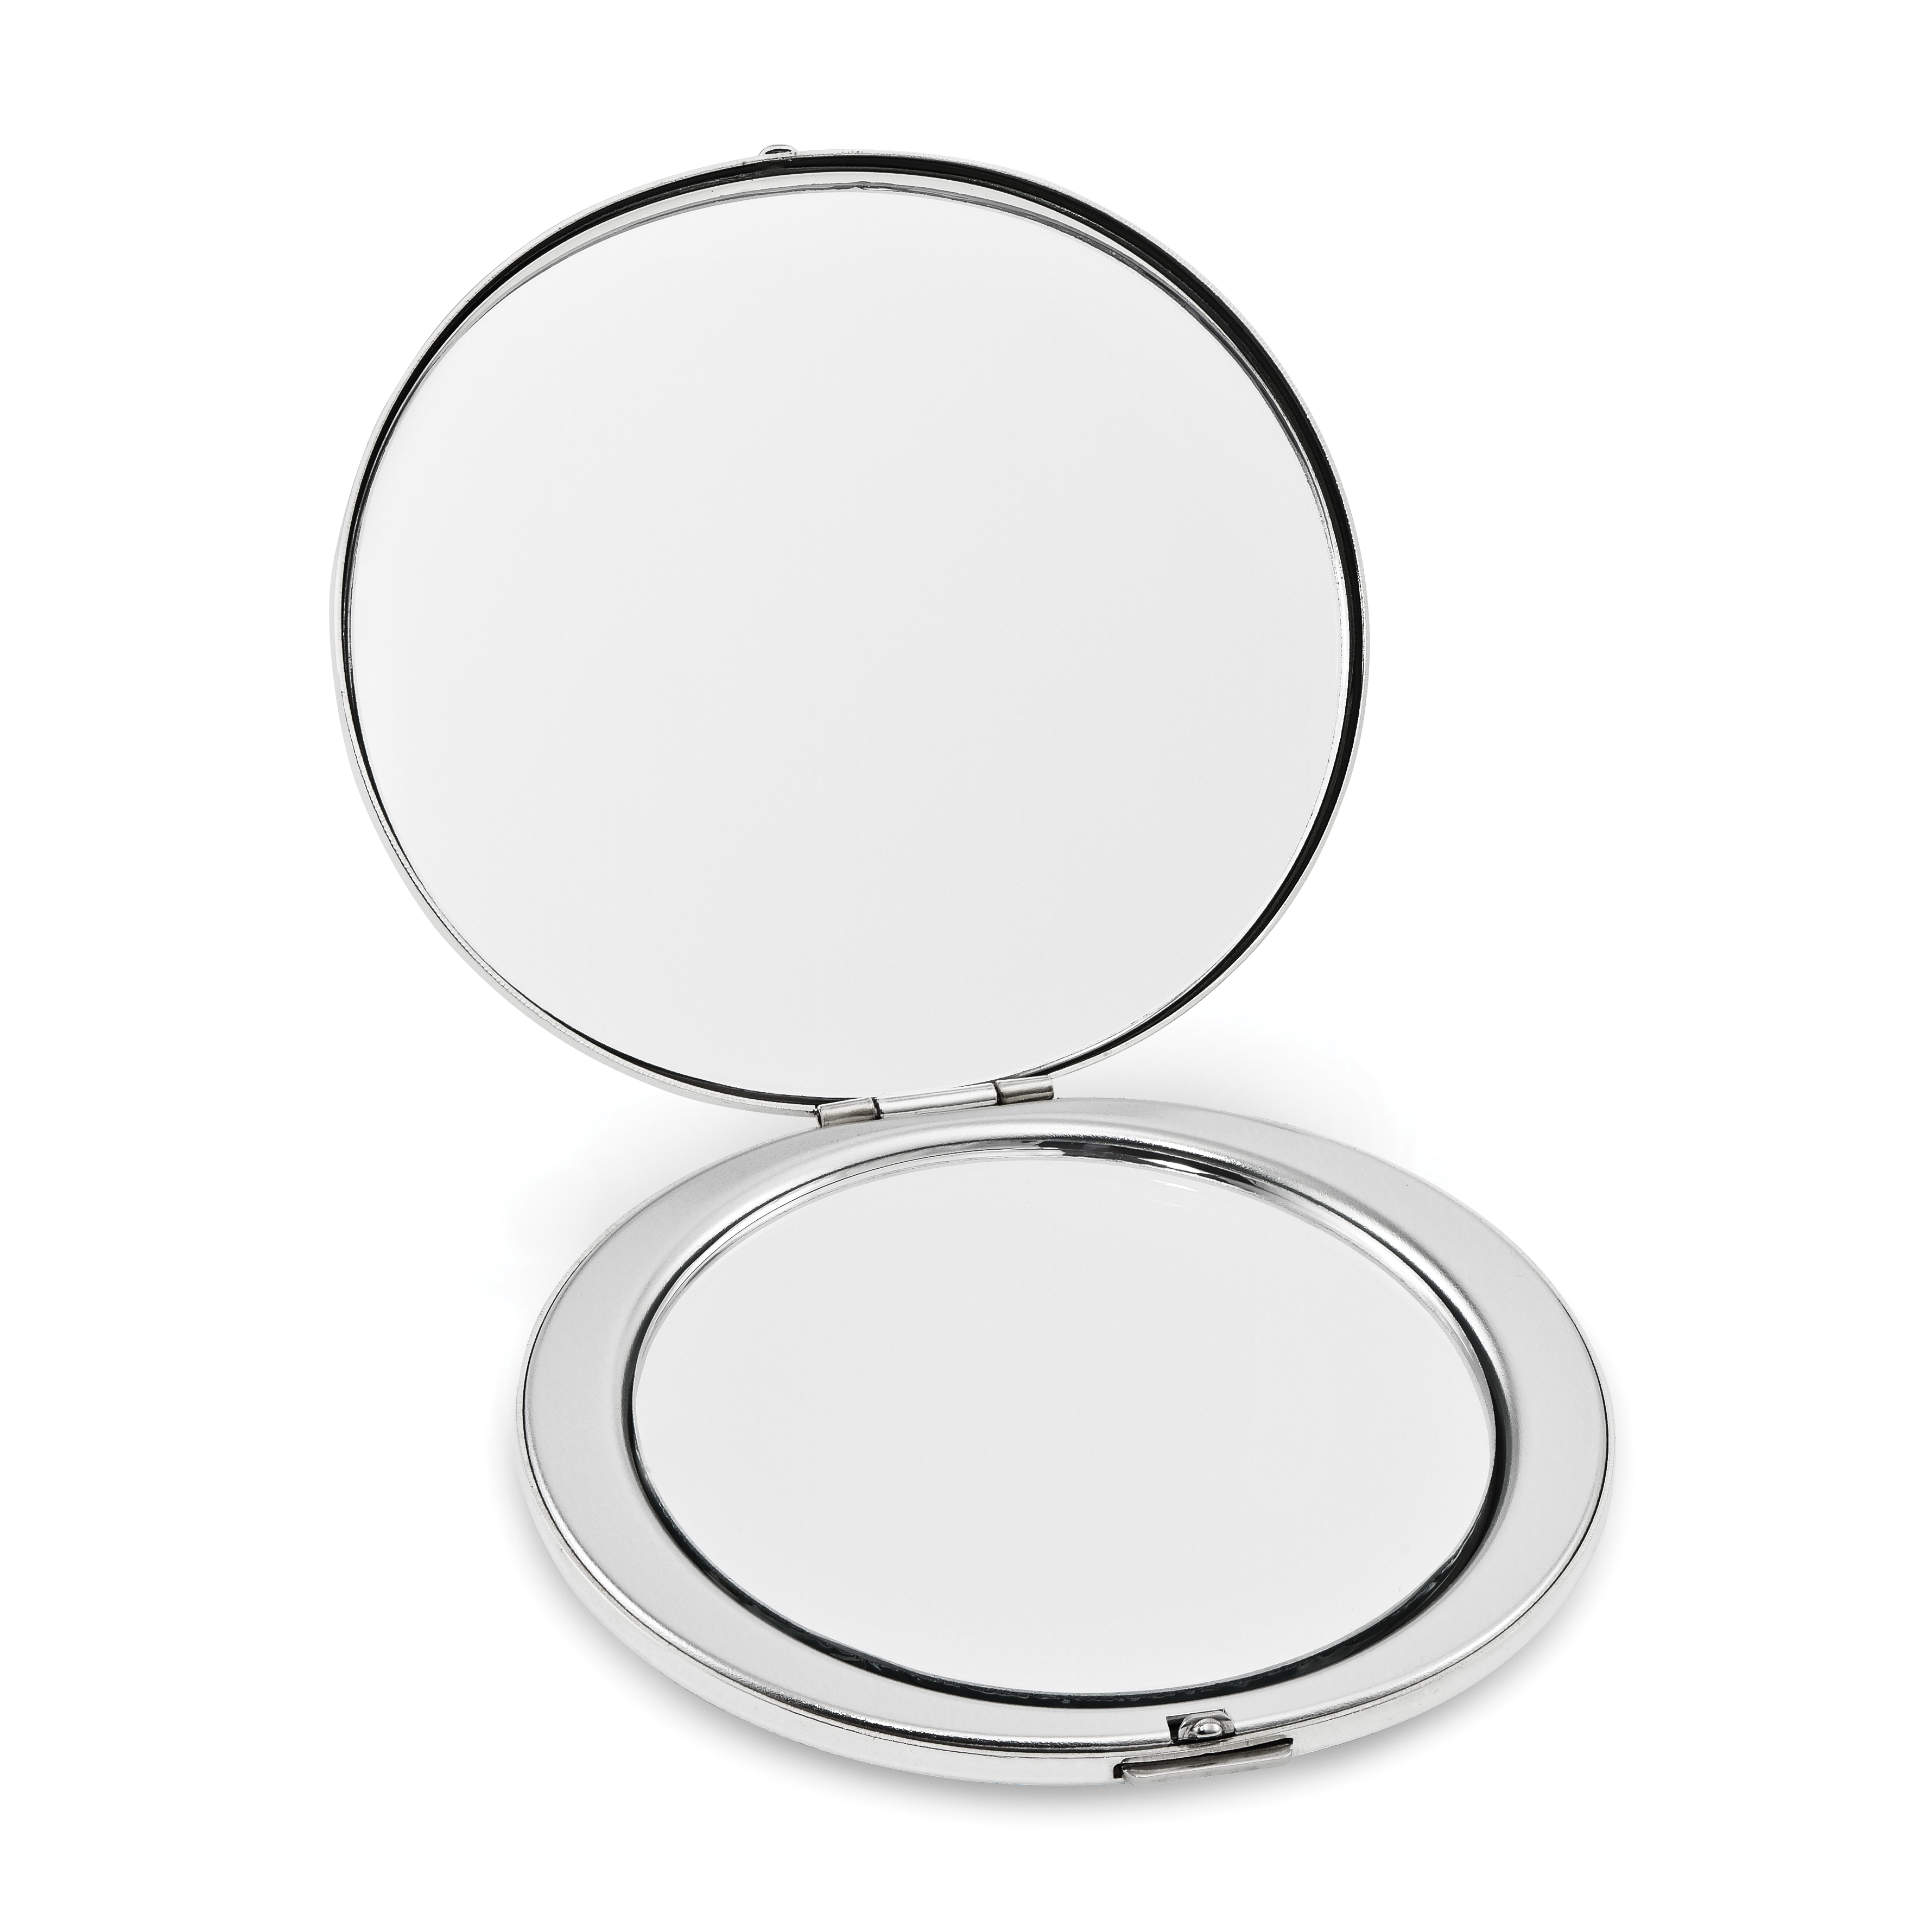 Silver-Tone Compact Mirror GM2728 788089052188 | eBay